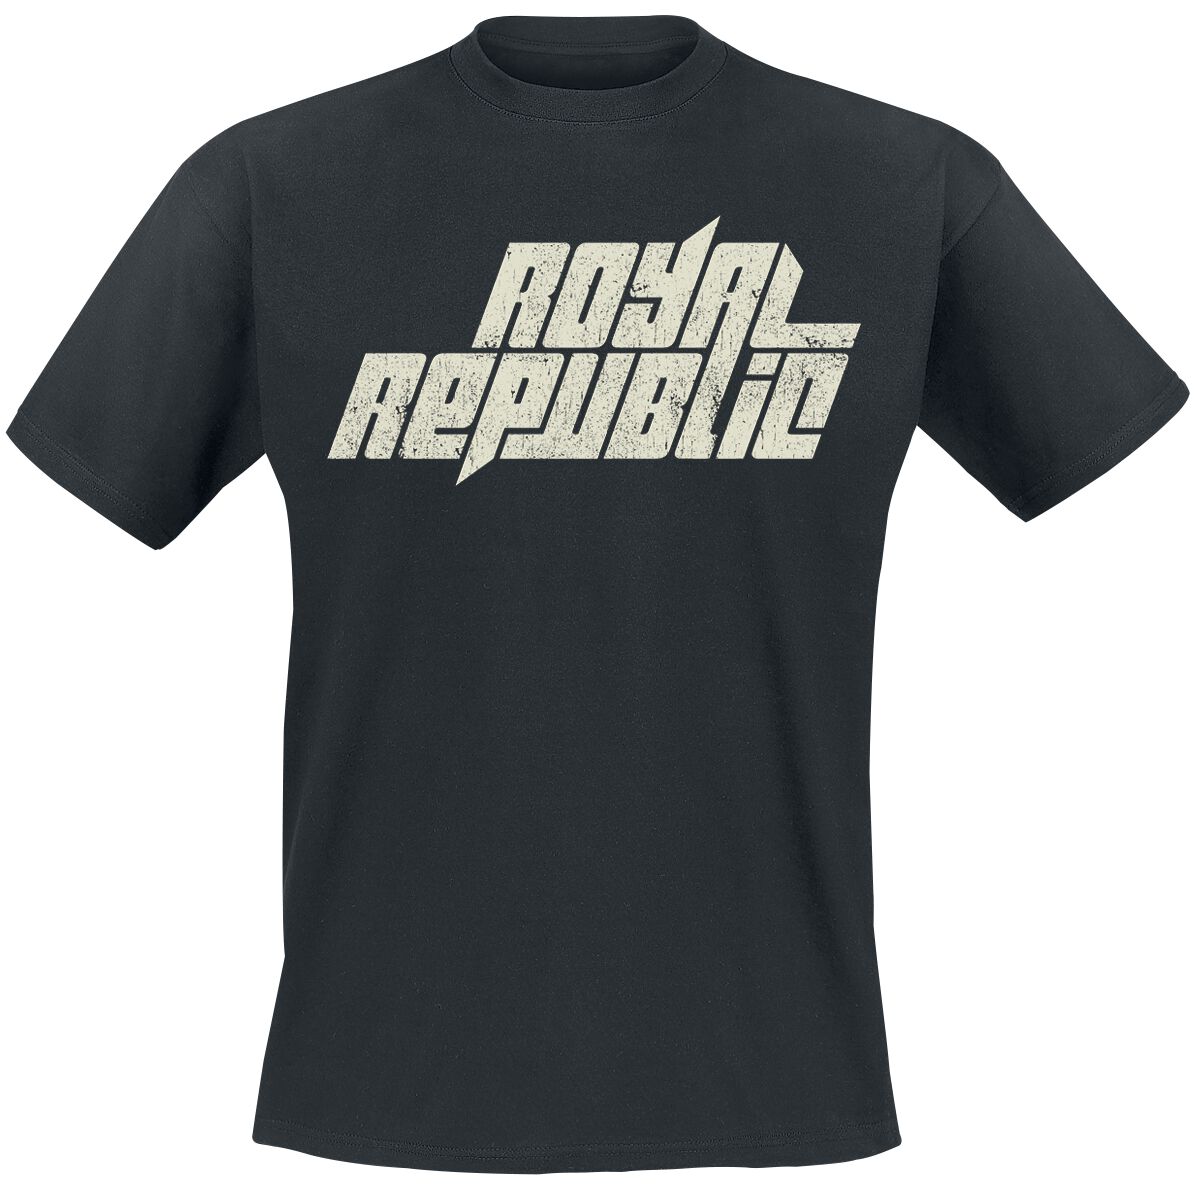 Royal Republic Vintage Logo T-Shirt schwarz in 5XL